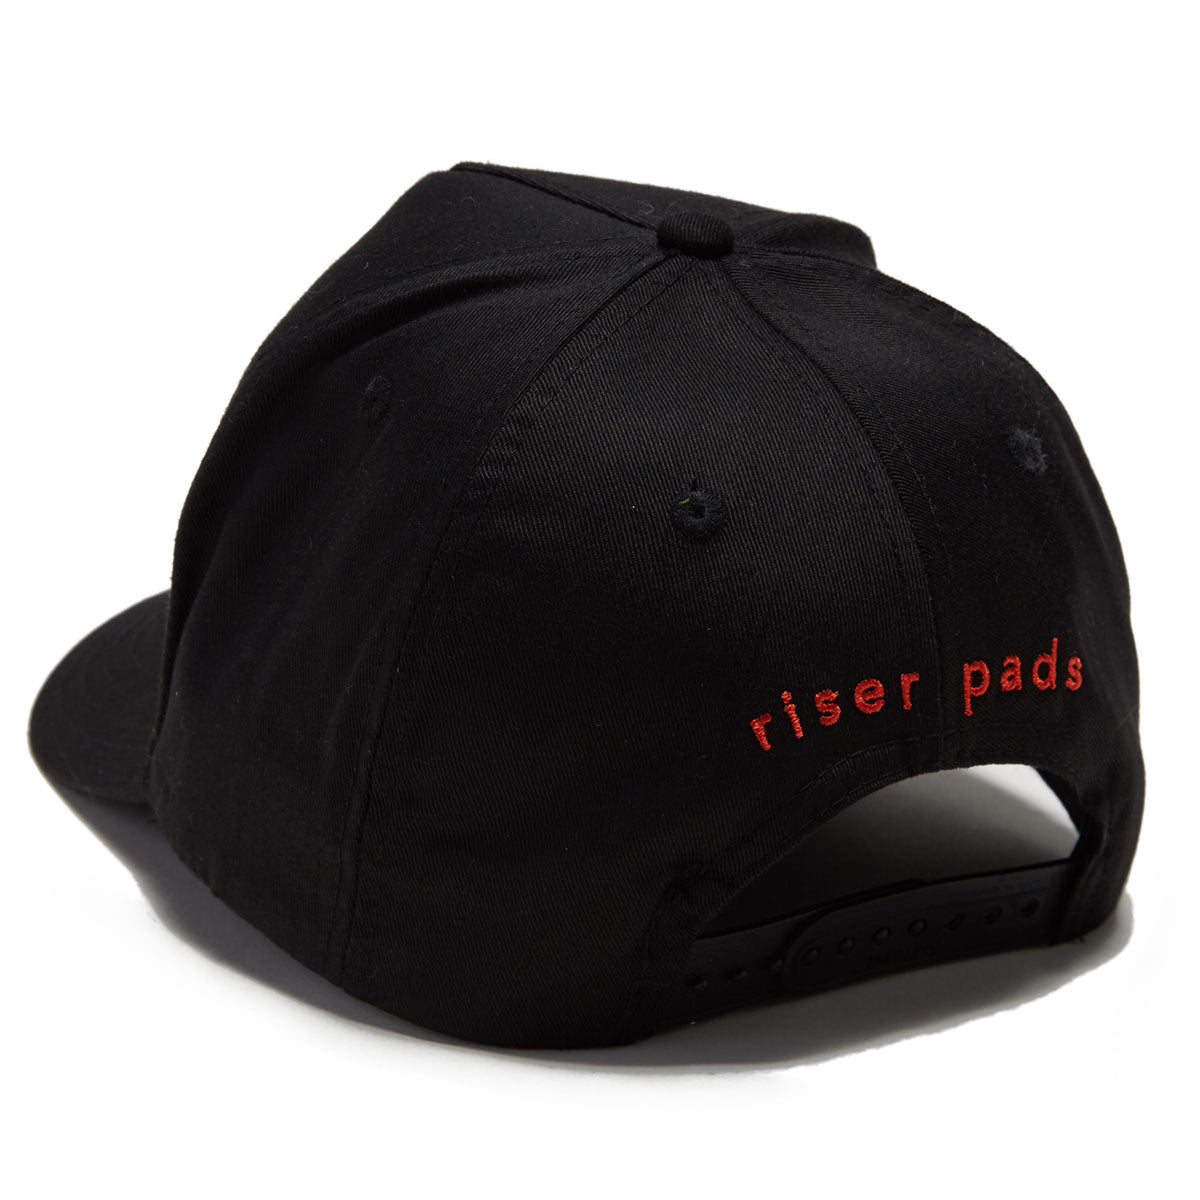 2 Riser Pads Dragon Hat - Black image 2